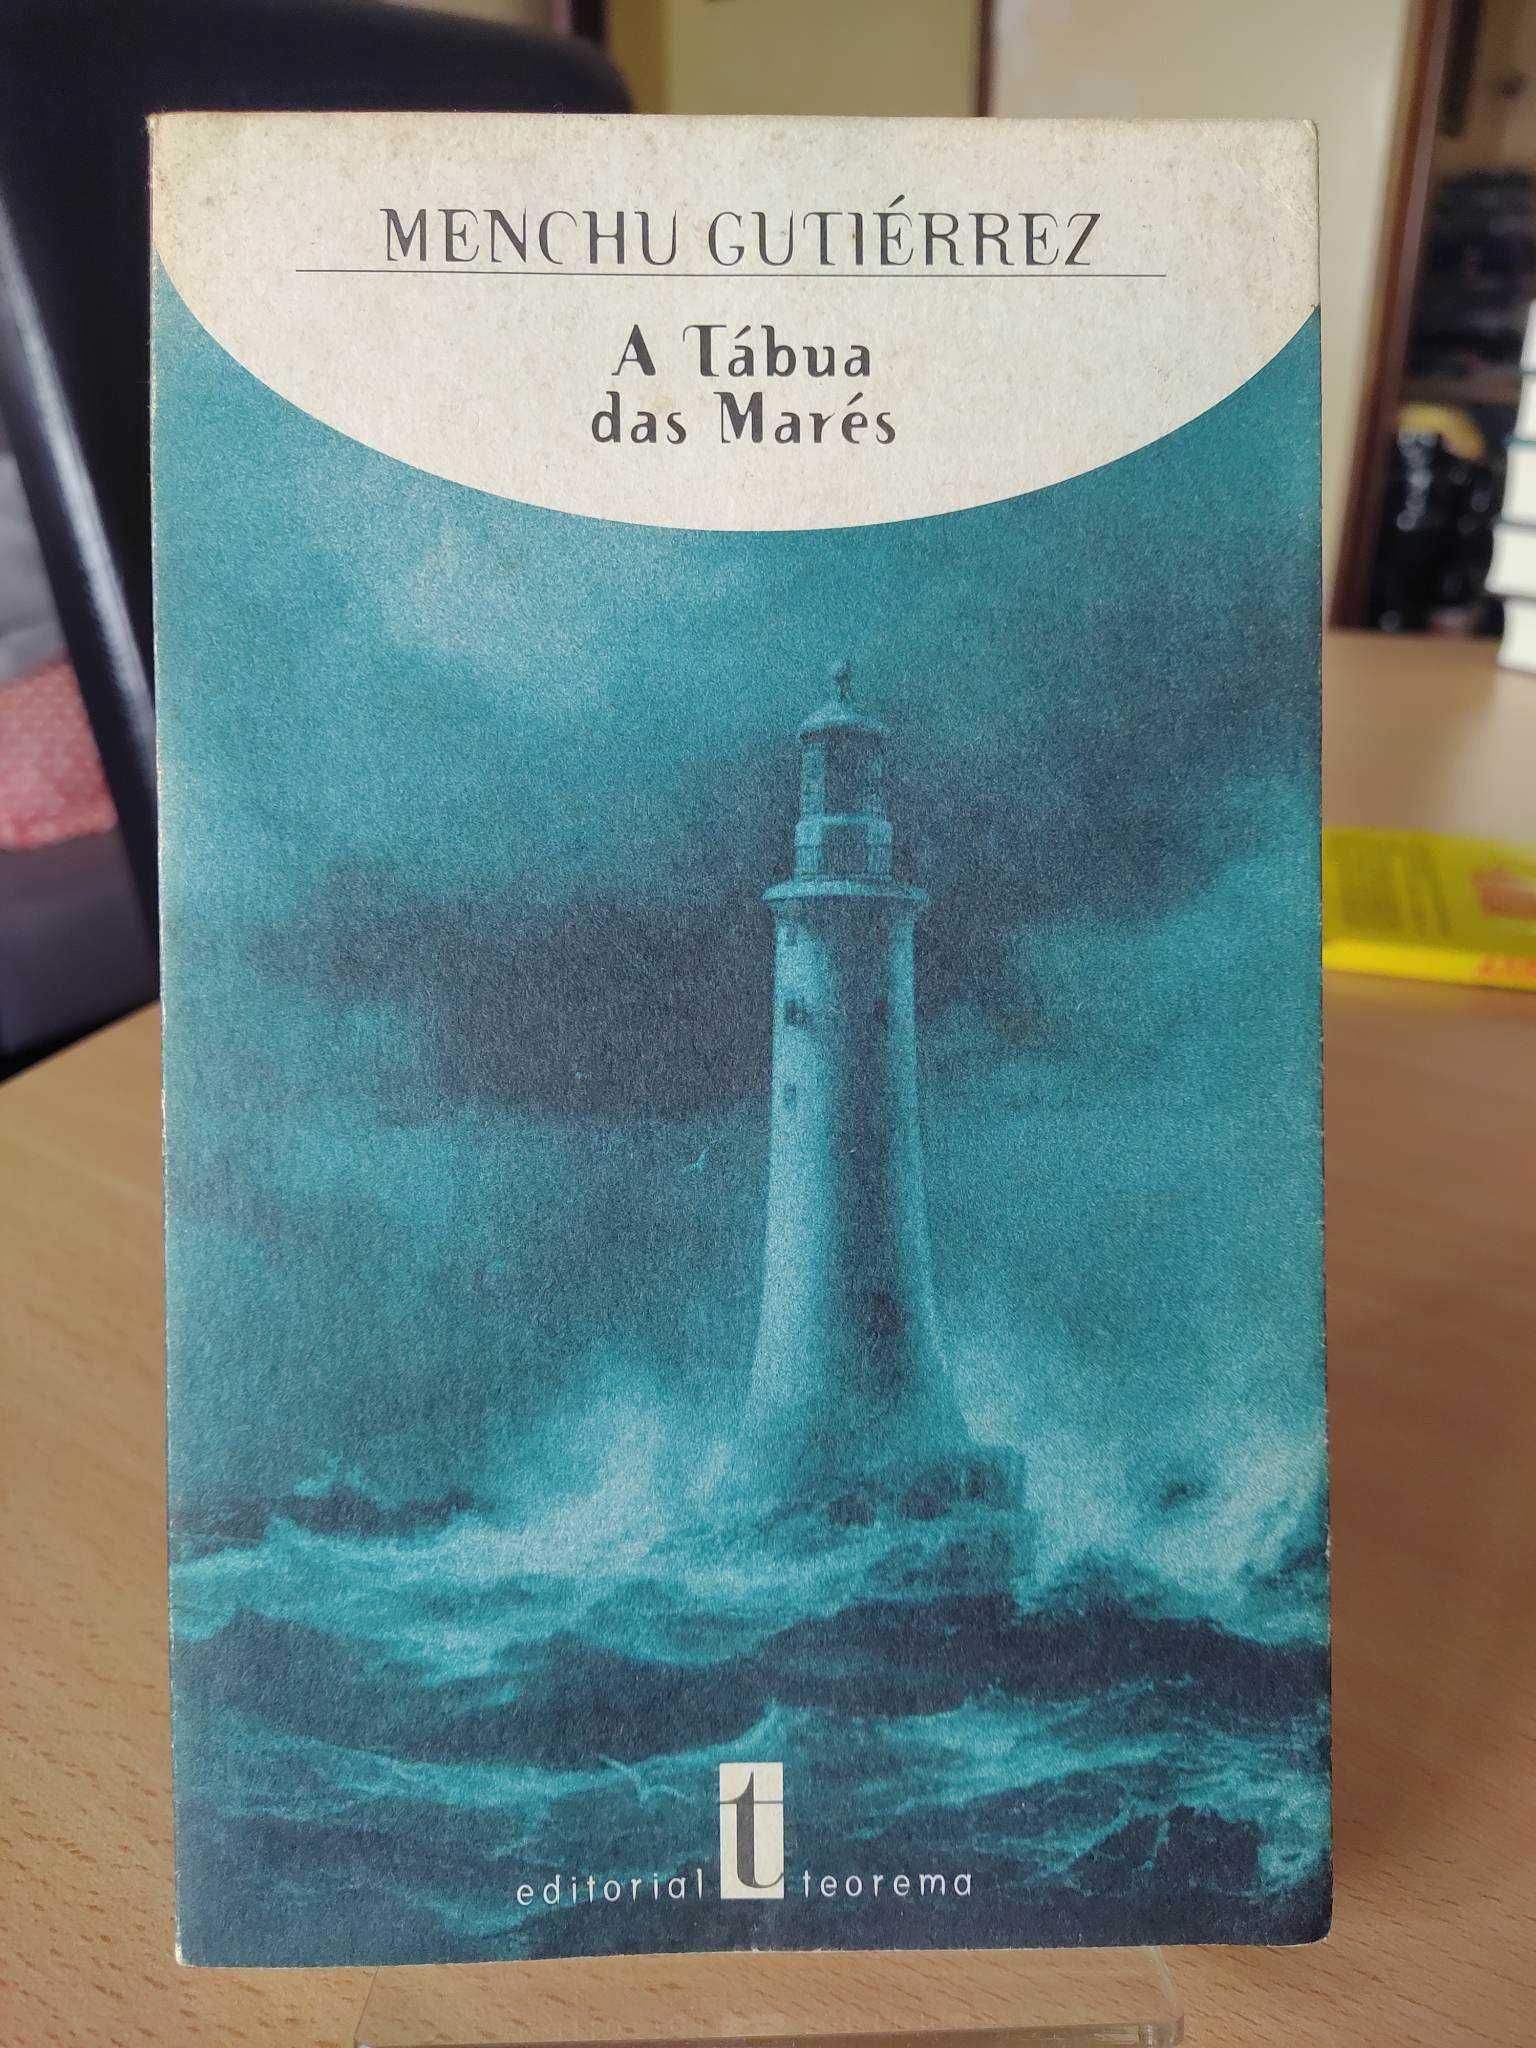 Livro “A tábua das marés”